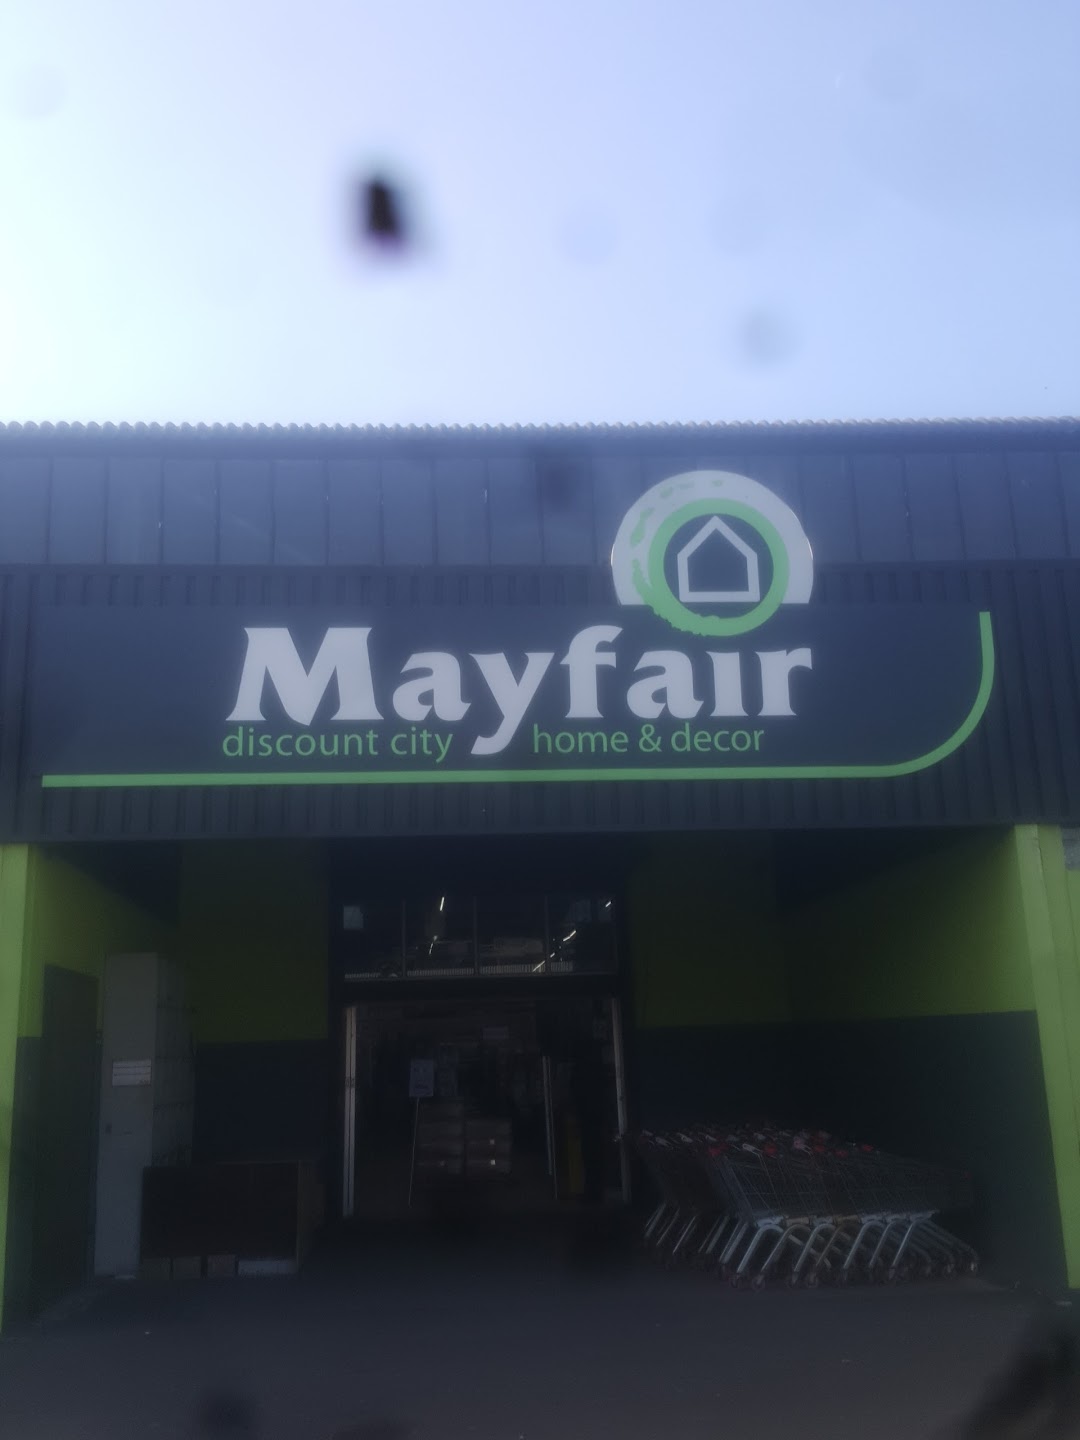 Mayfair Home and Decor